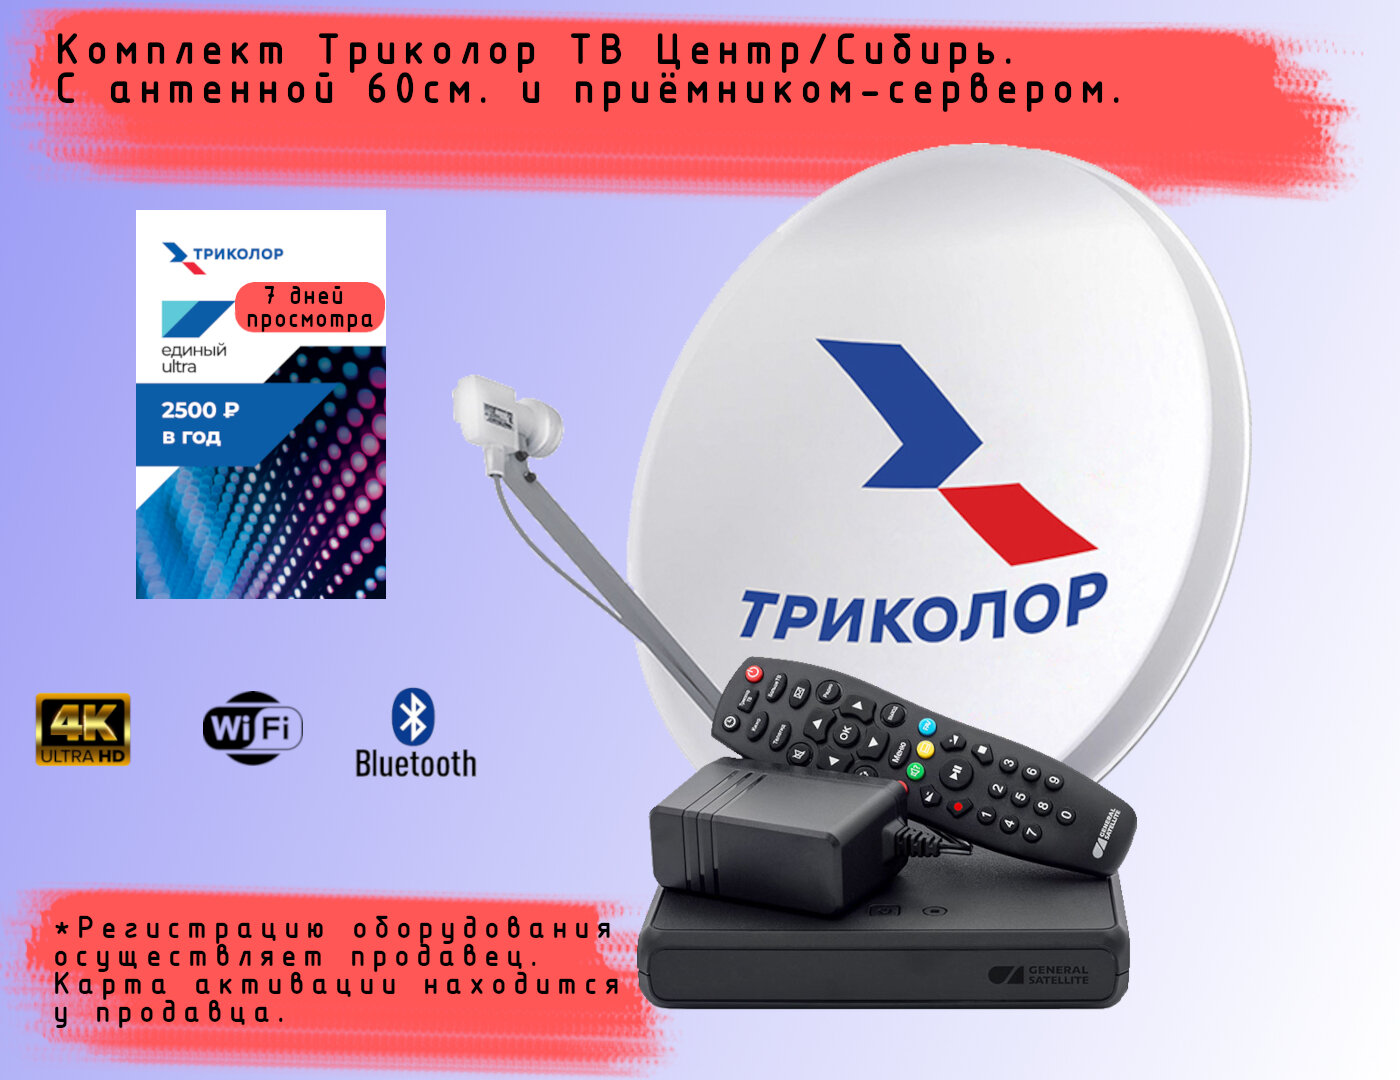 Комплект спутникового телевидения Триколор с ресивером GS B529L/B626L/B627L+подписка 7 дней (Центр/Сибирь, Единый Ультра HD, 2500 руб./год)